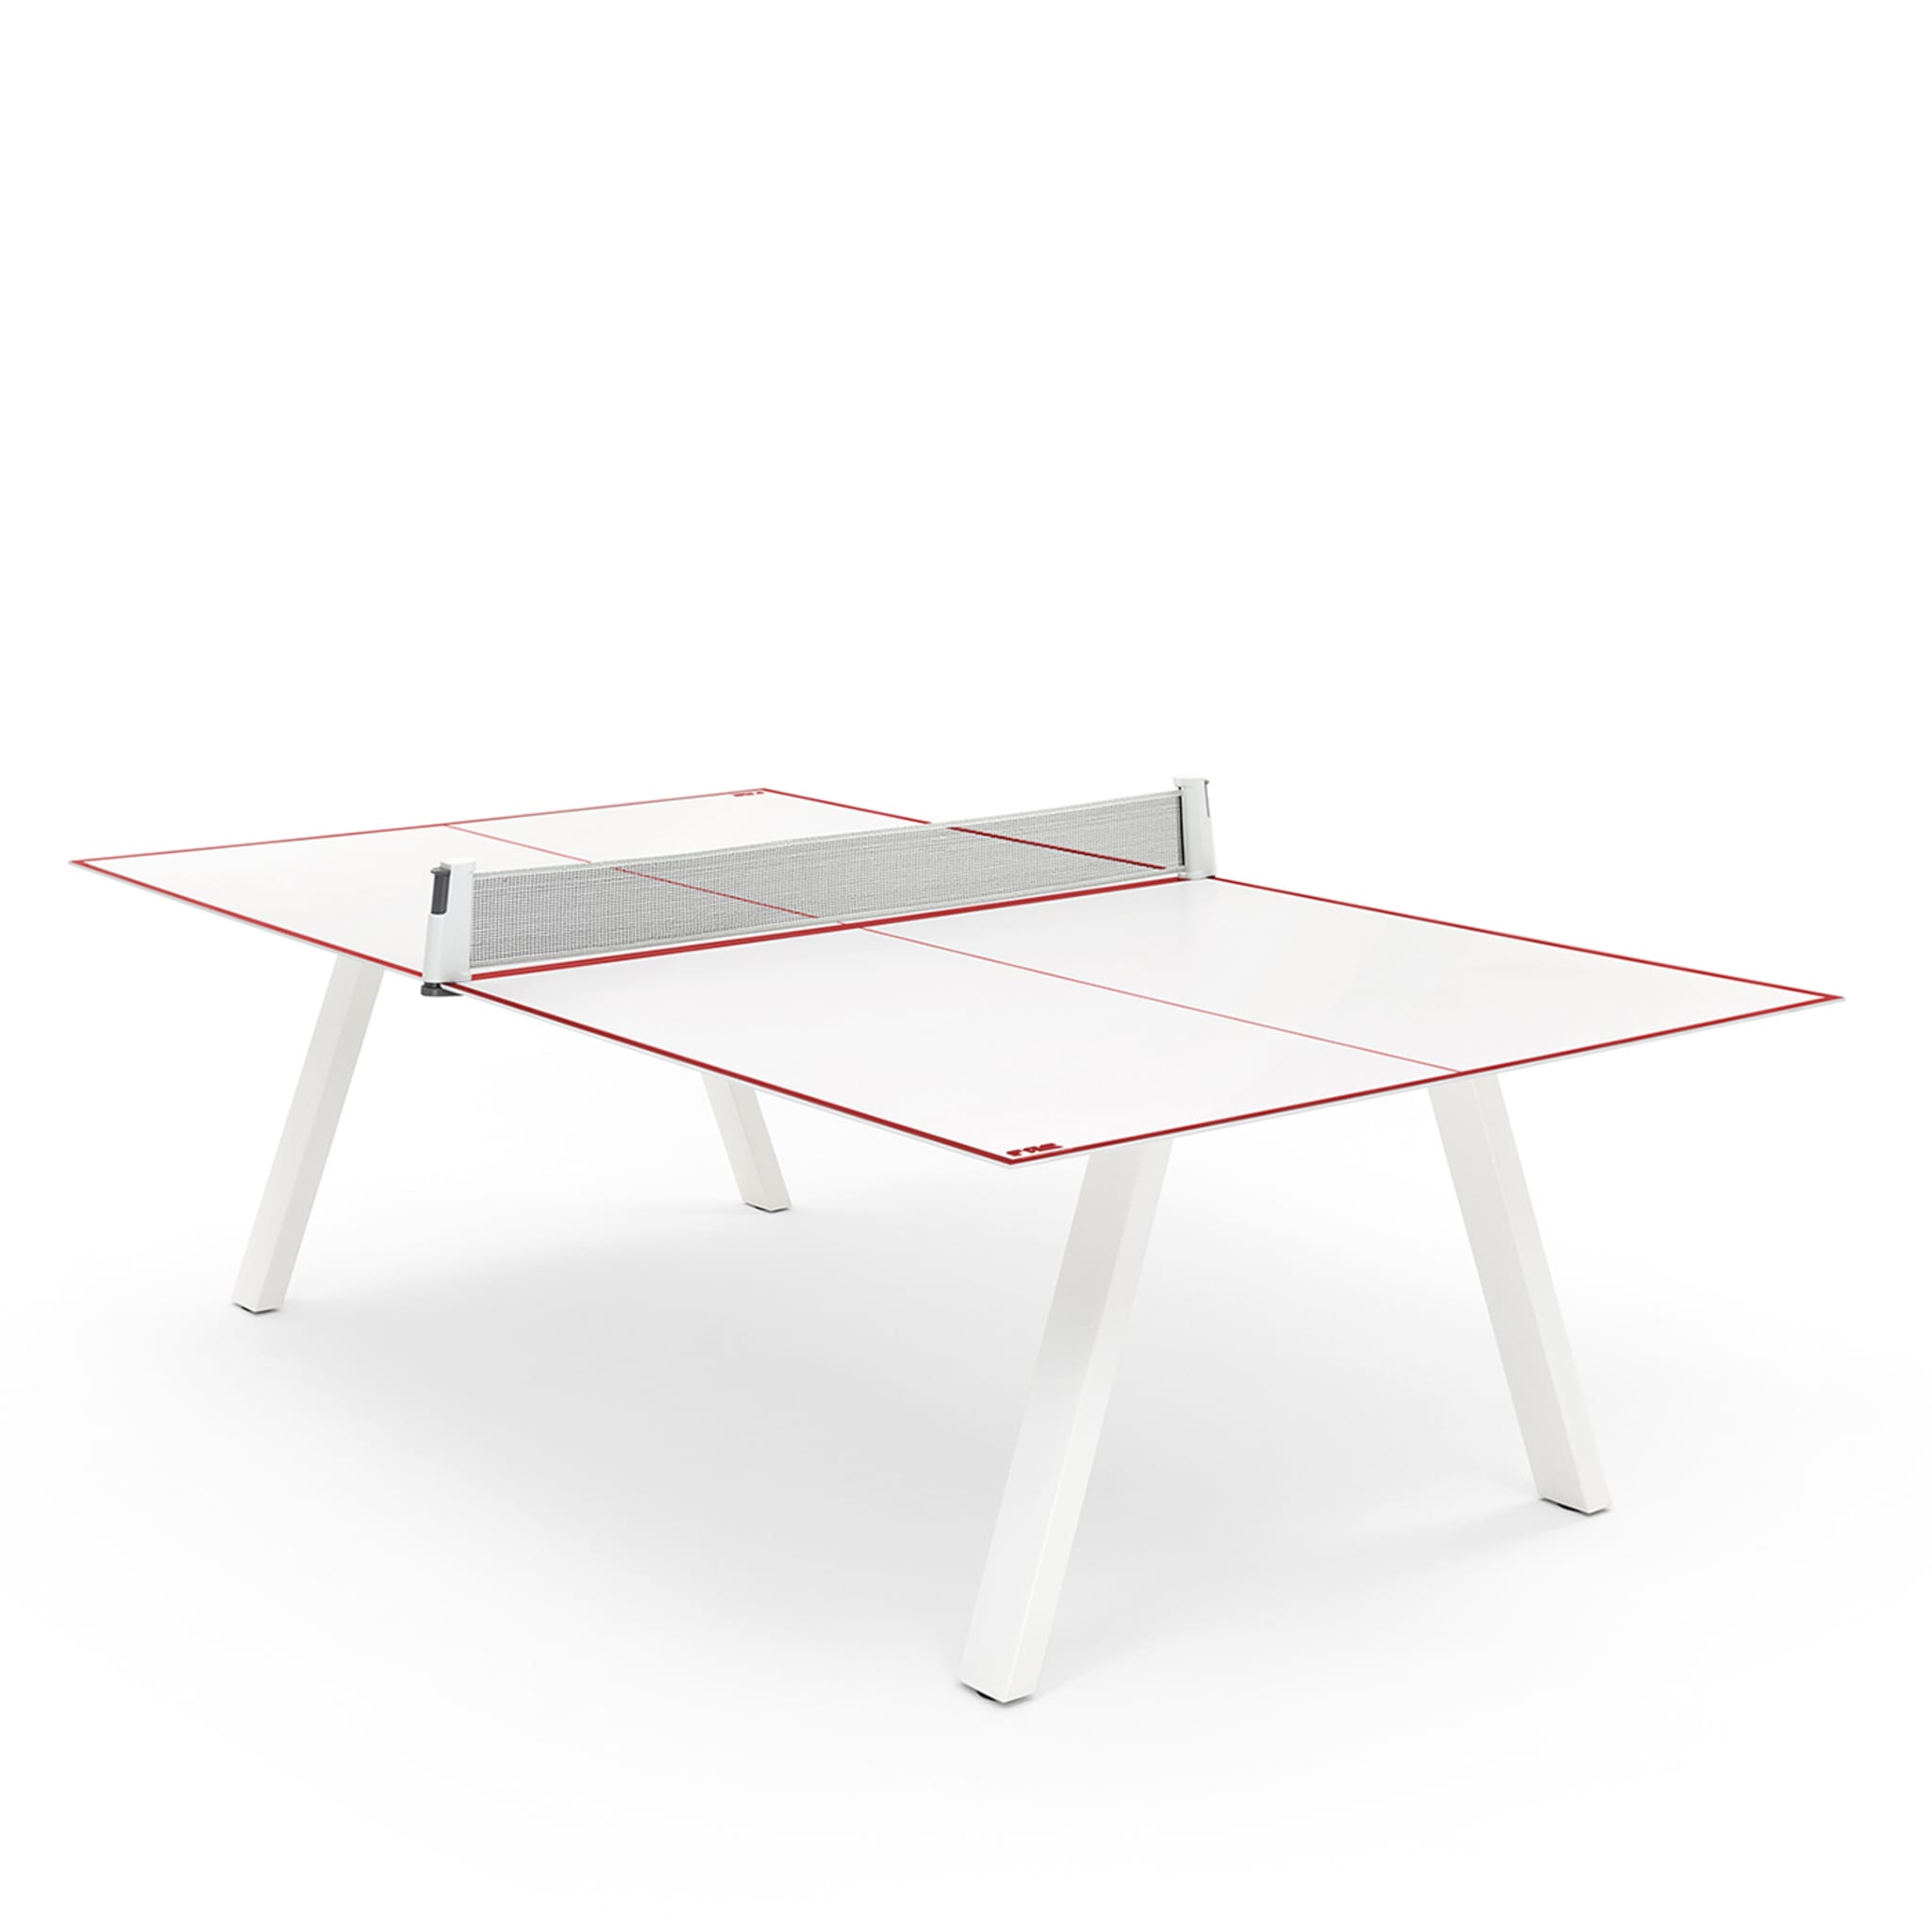 Grasshopper Outdoor White Ping Pong Table by Basaglia + Rota Nodari - Alternative view 1